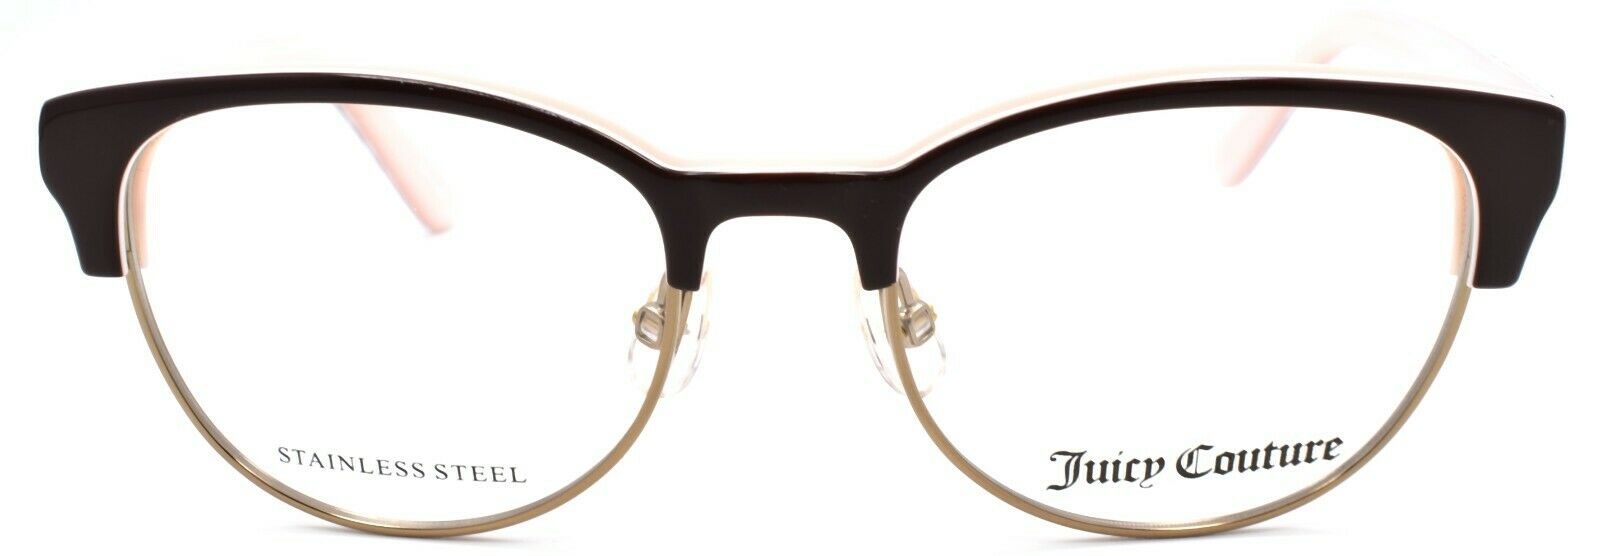 2-Juicy Couture JU928 DQ2 Girls Eyeglasses Frames 45-16-120 Brown / Pink w/ Hearts-762753163905-IKSpecs